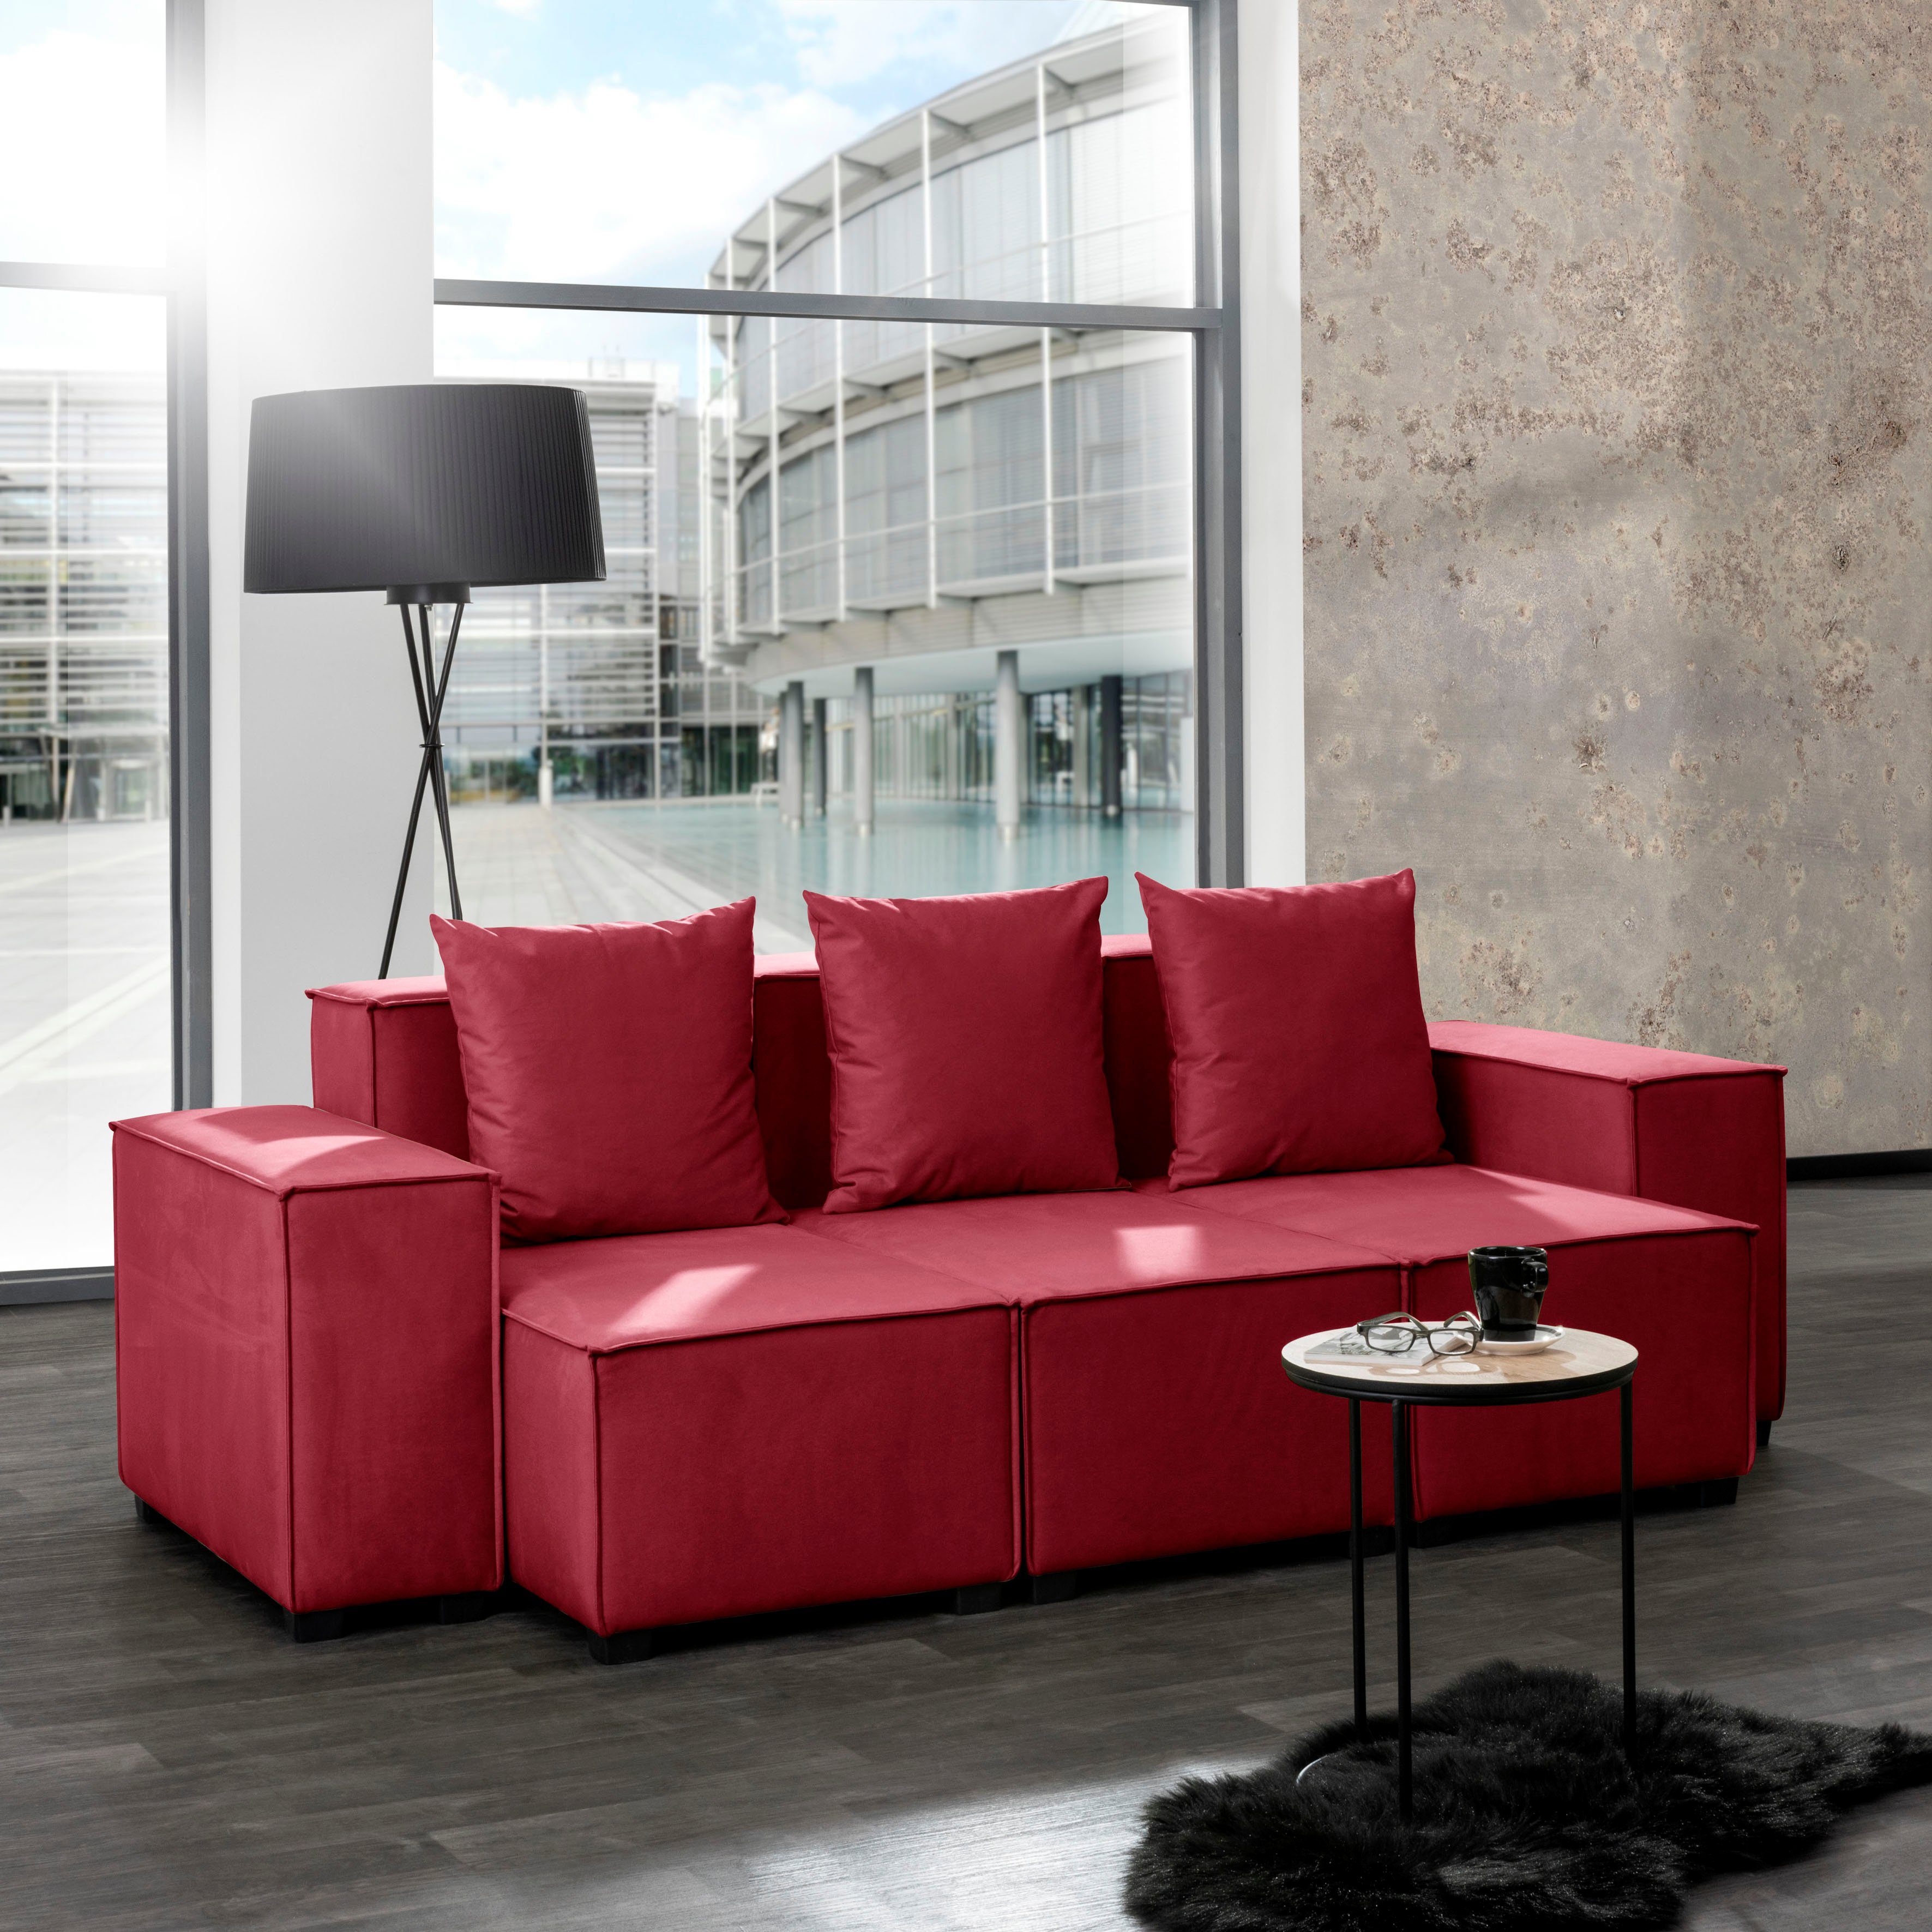 Max Winzer® Wohnlandschaft MOVE, Set, Sofa-Set 02 aus 8 Sitz-Elementen, inklusive 3 Zierkissen, kombinierbar rot | Wohnlandschaften